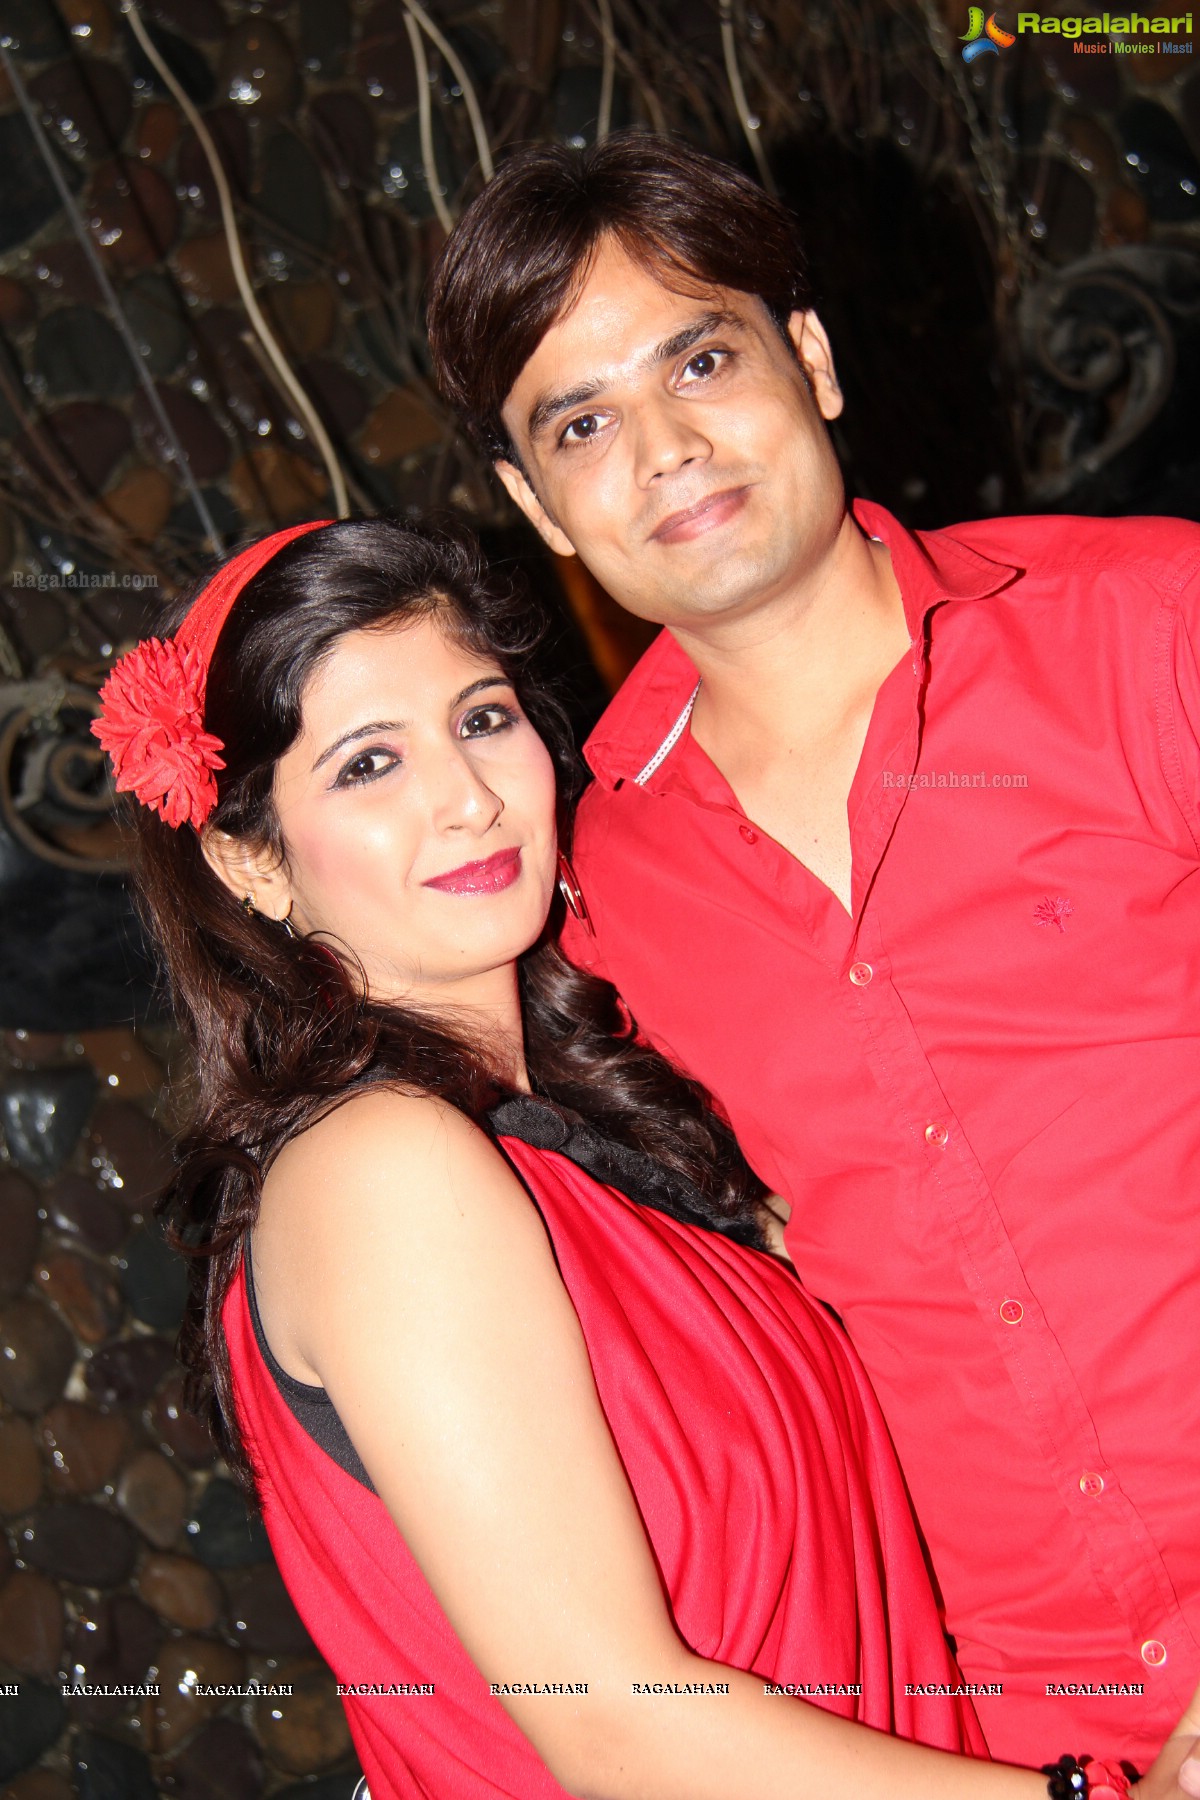 Night Shades Couples Club Musical Antakshari at Solitaire Hotel, Hyderabad